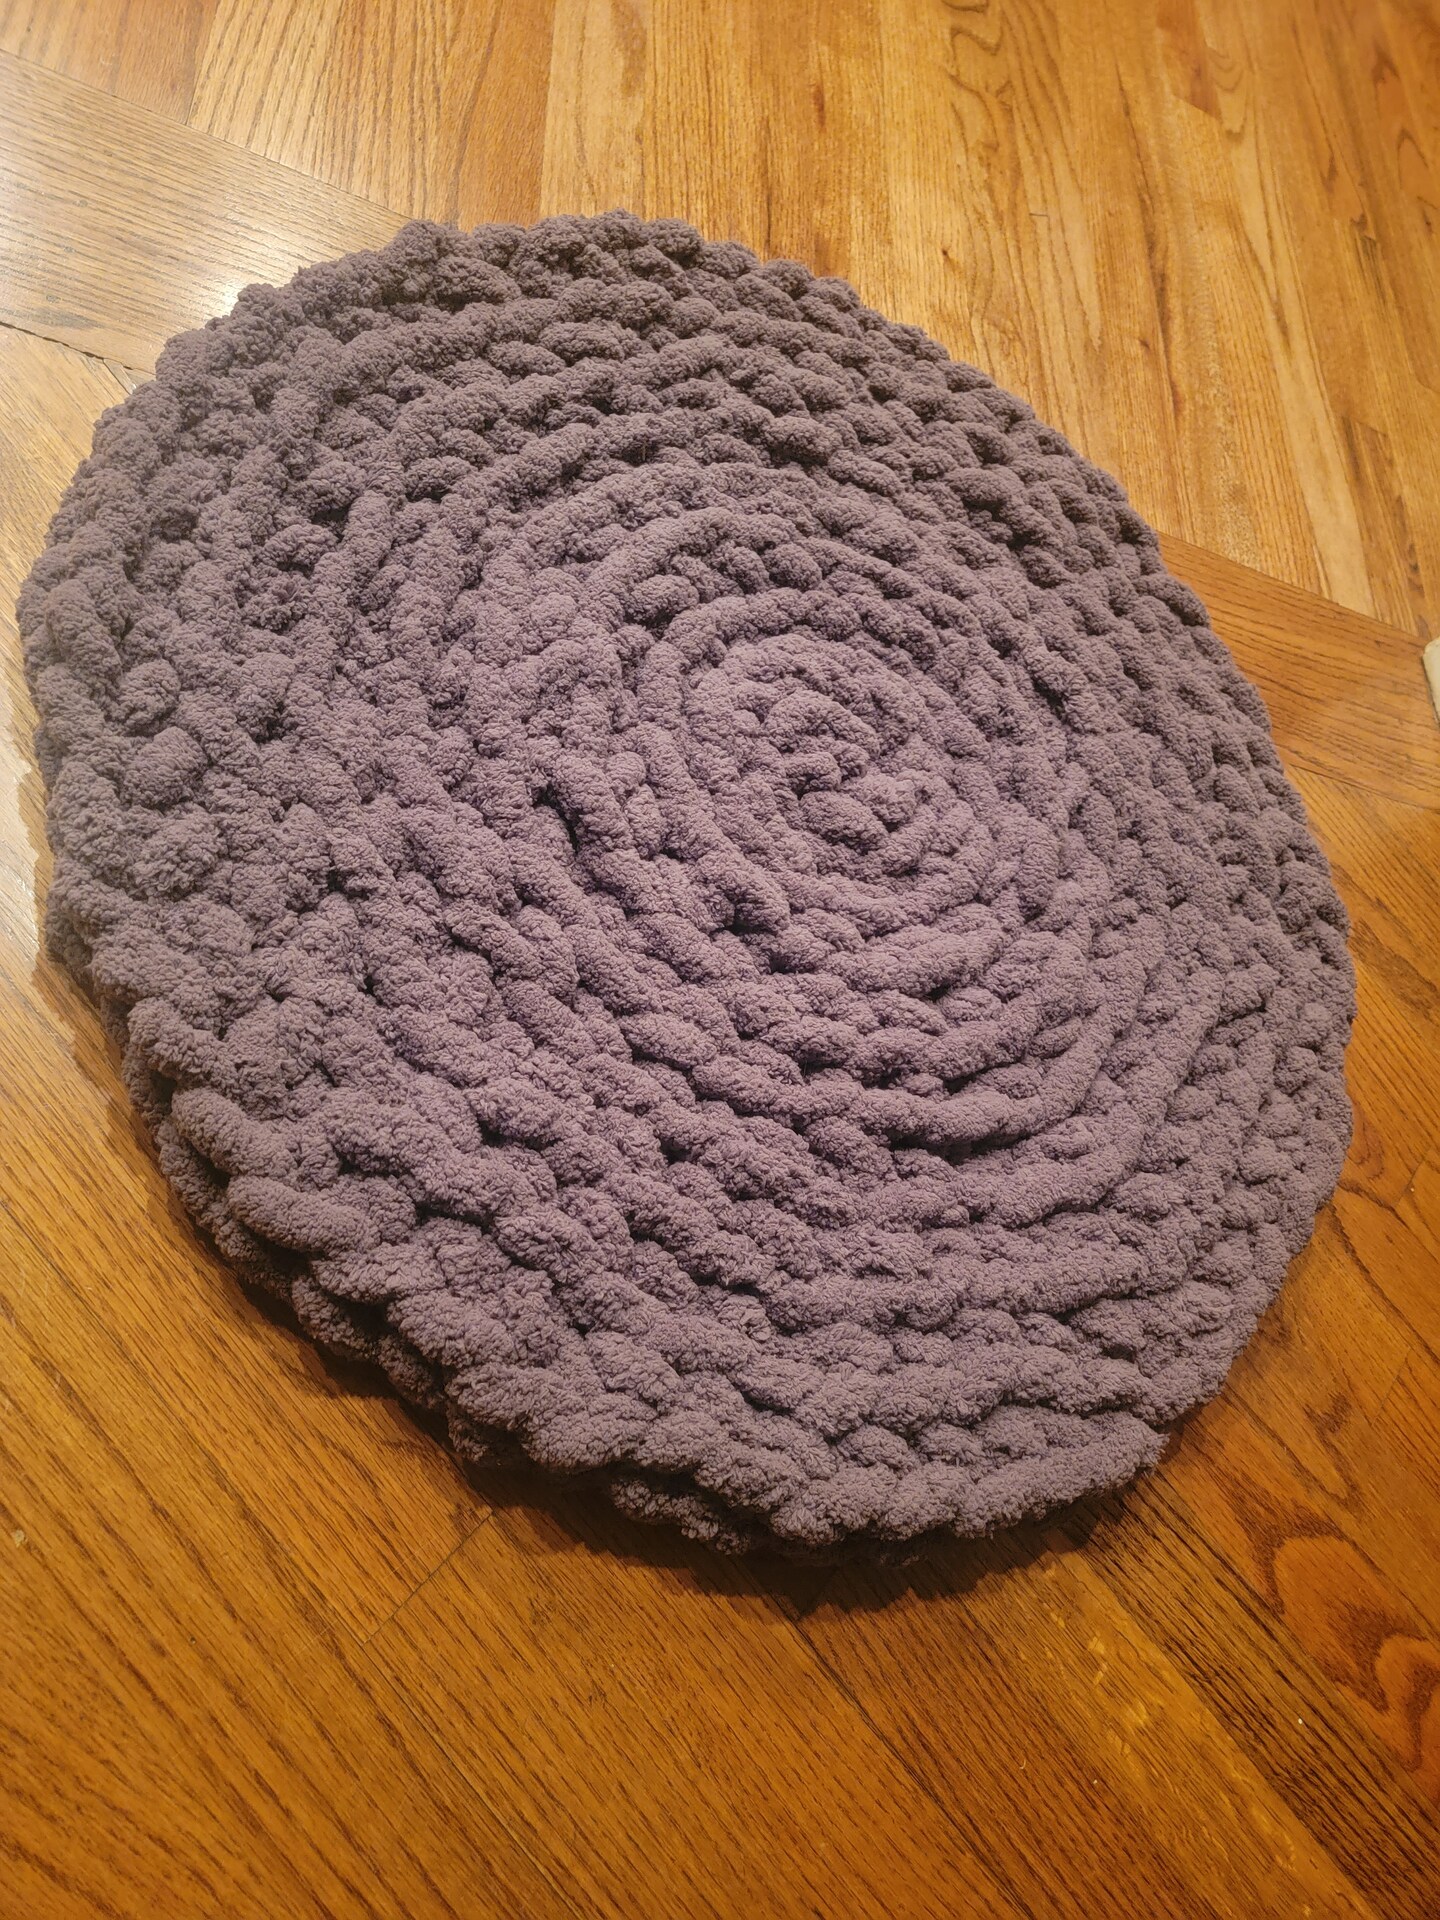 How to Hand Crochet a Circular Rug